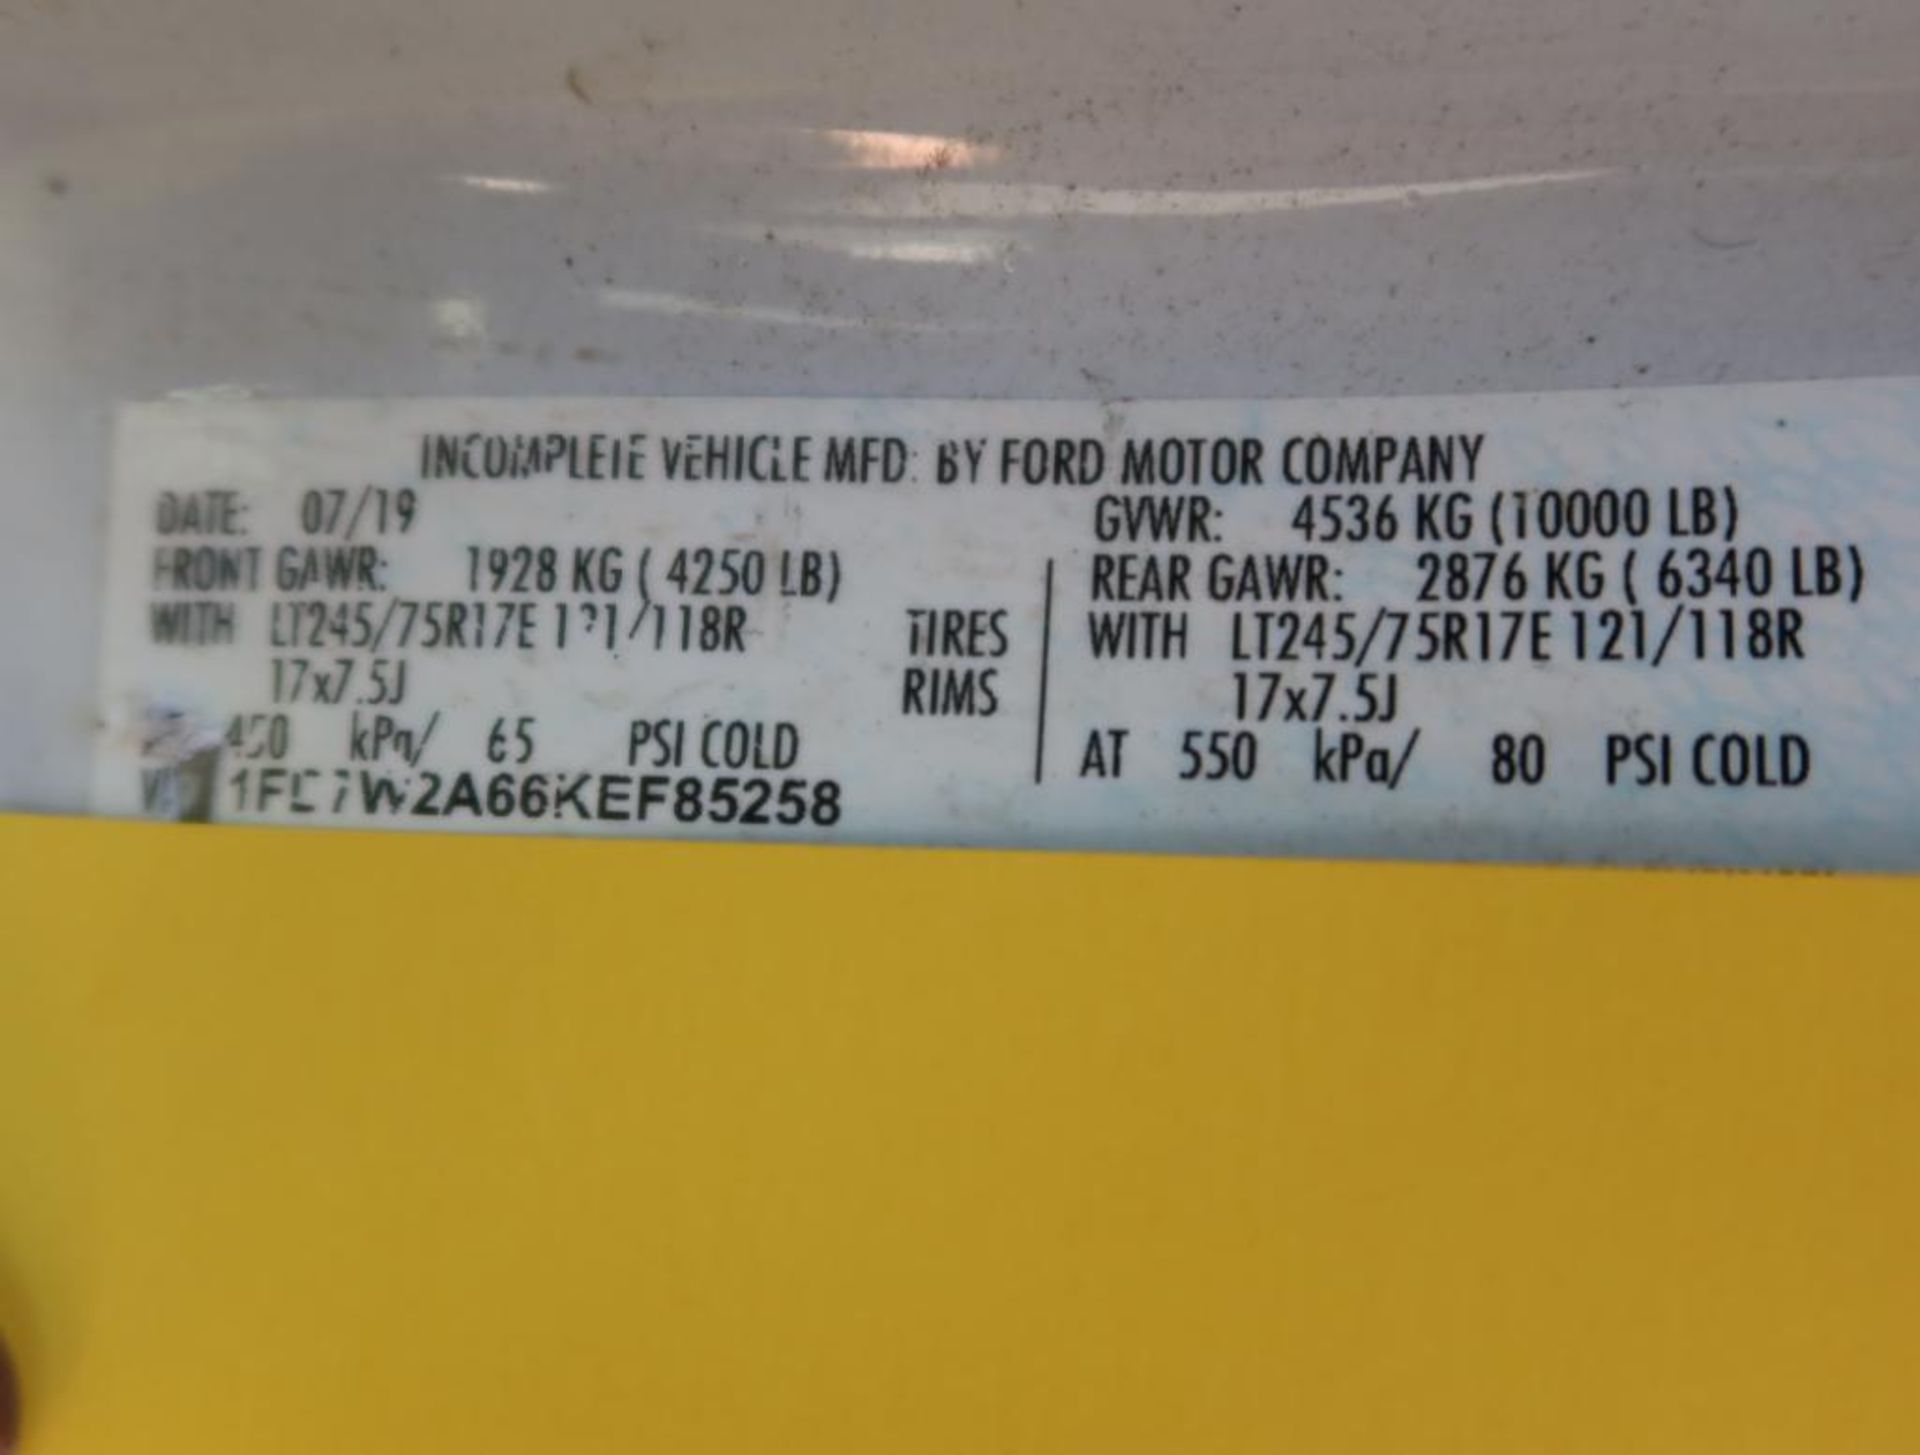 2019 Ford F-250 4 Door Service Body w/Ladder Rack, Gas, License# NPX-J97, VIN 1FD7W2A66KEF85258, 56, - Image 8 of 8